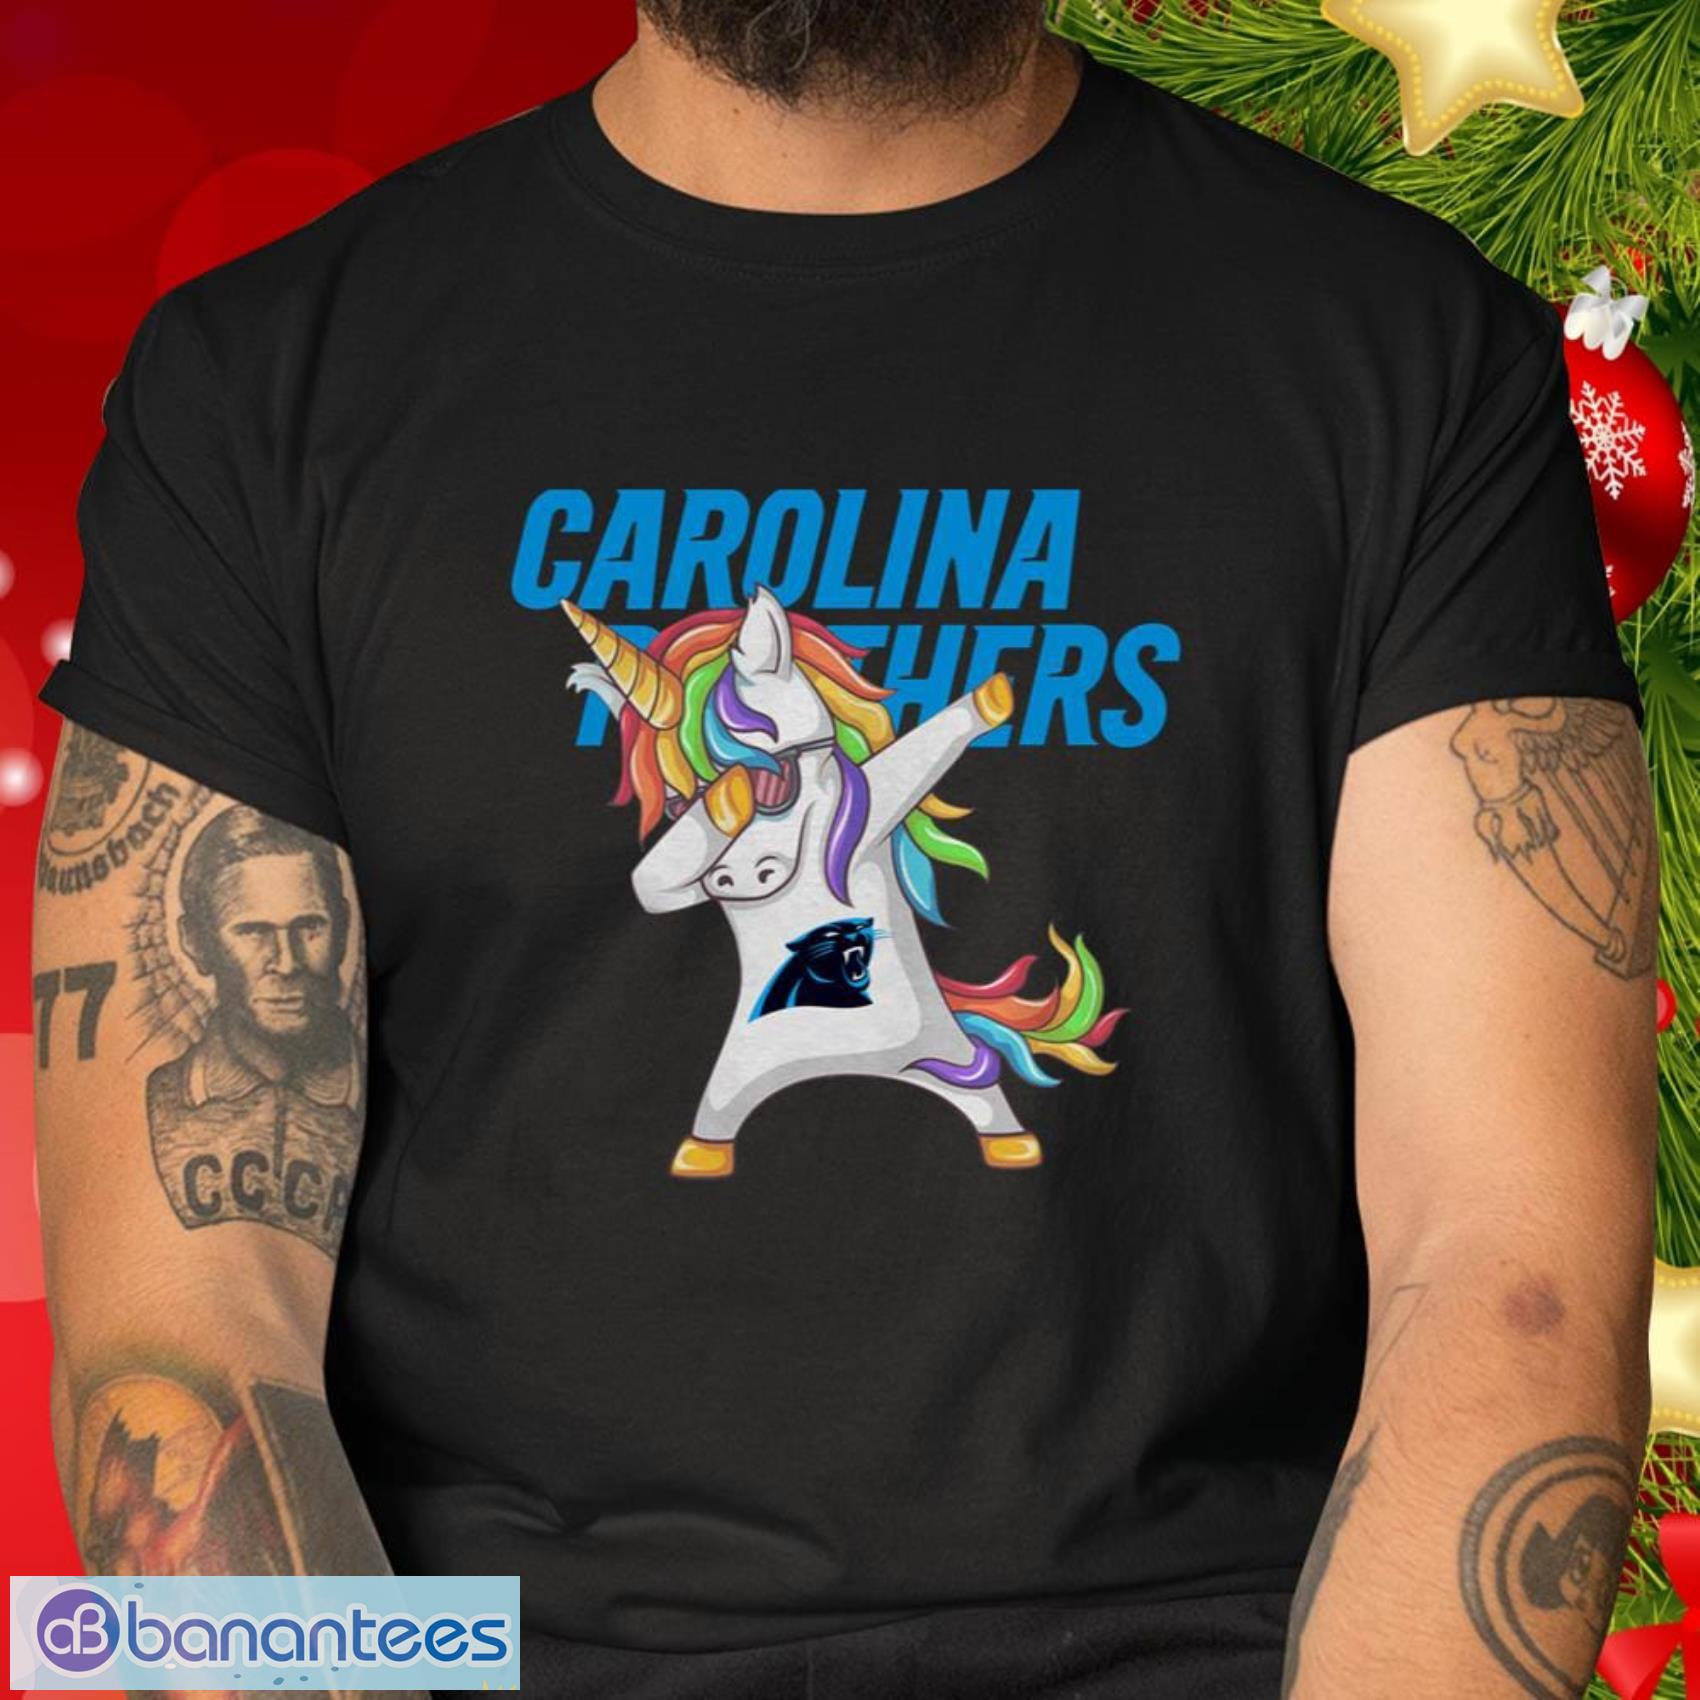 Carolina Panthers NFL Football Gift Fr Fans Funny Unicorn Dabbing Sports T Shirt - Carolina Panthers NFL Football Funny Unicorn Dabbing Sports T Shirt_2